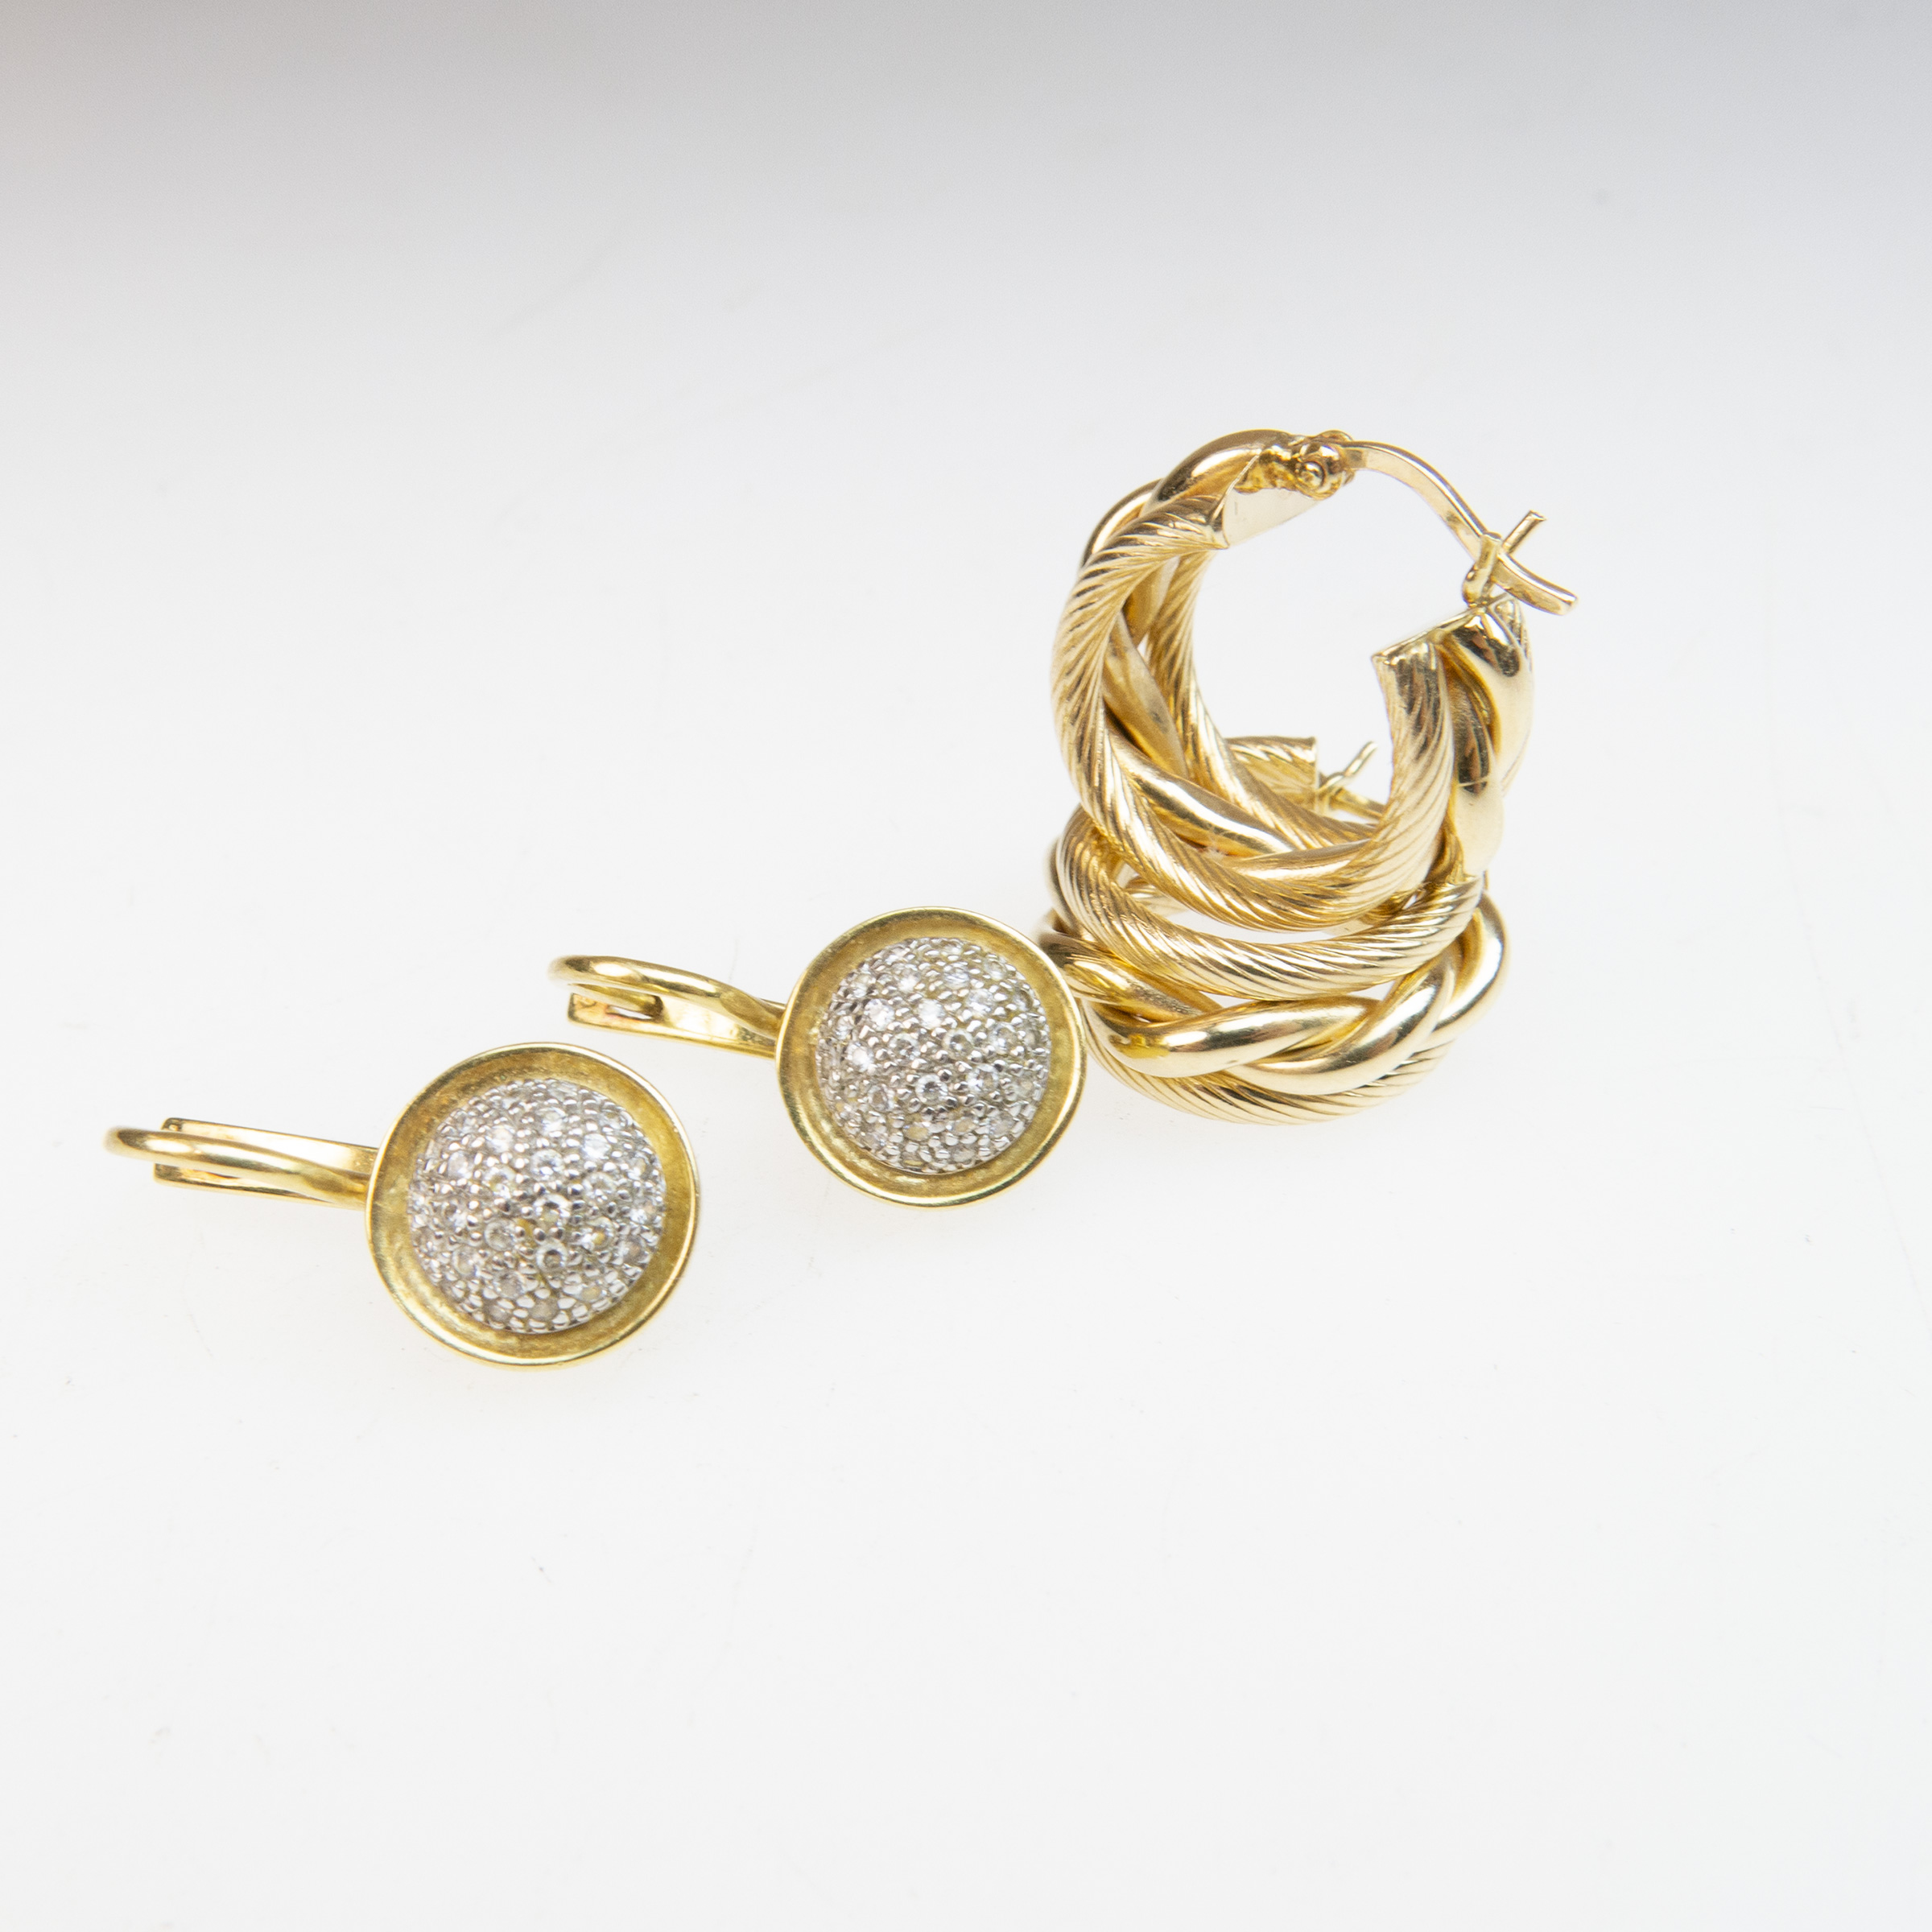 Pair Of 18k Yellow Gold Hook-Back Earrings